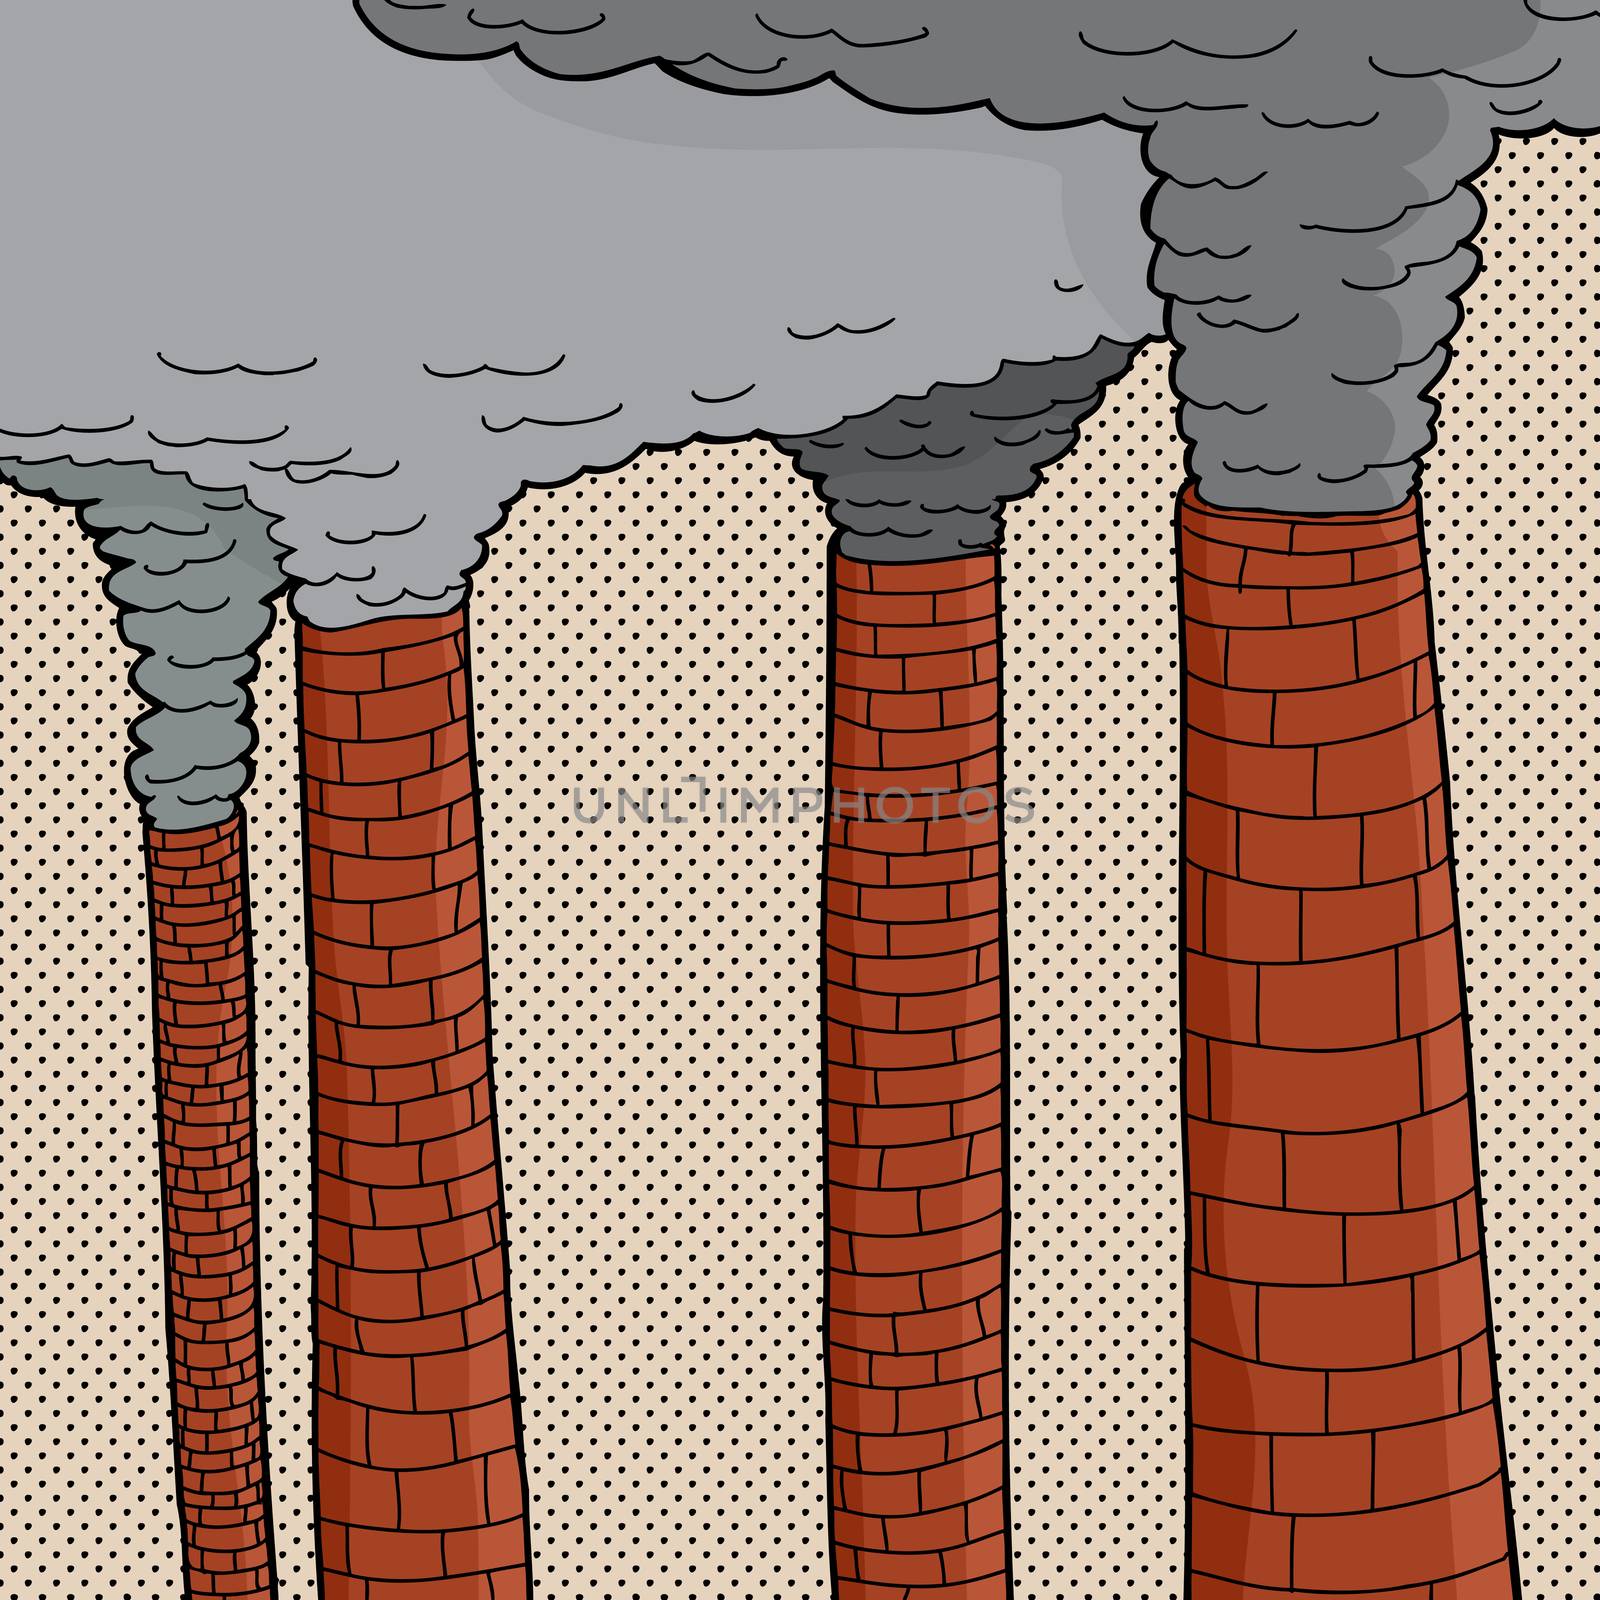 Four old brick cartoon factory smokestacks polluting